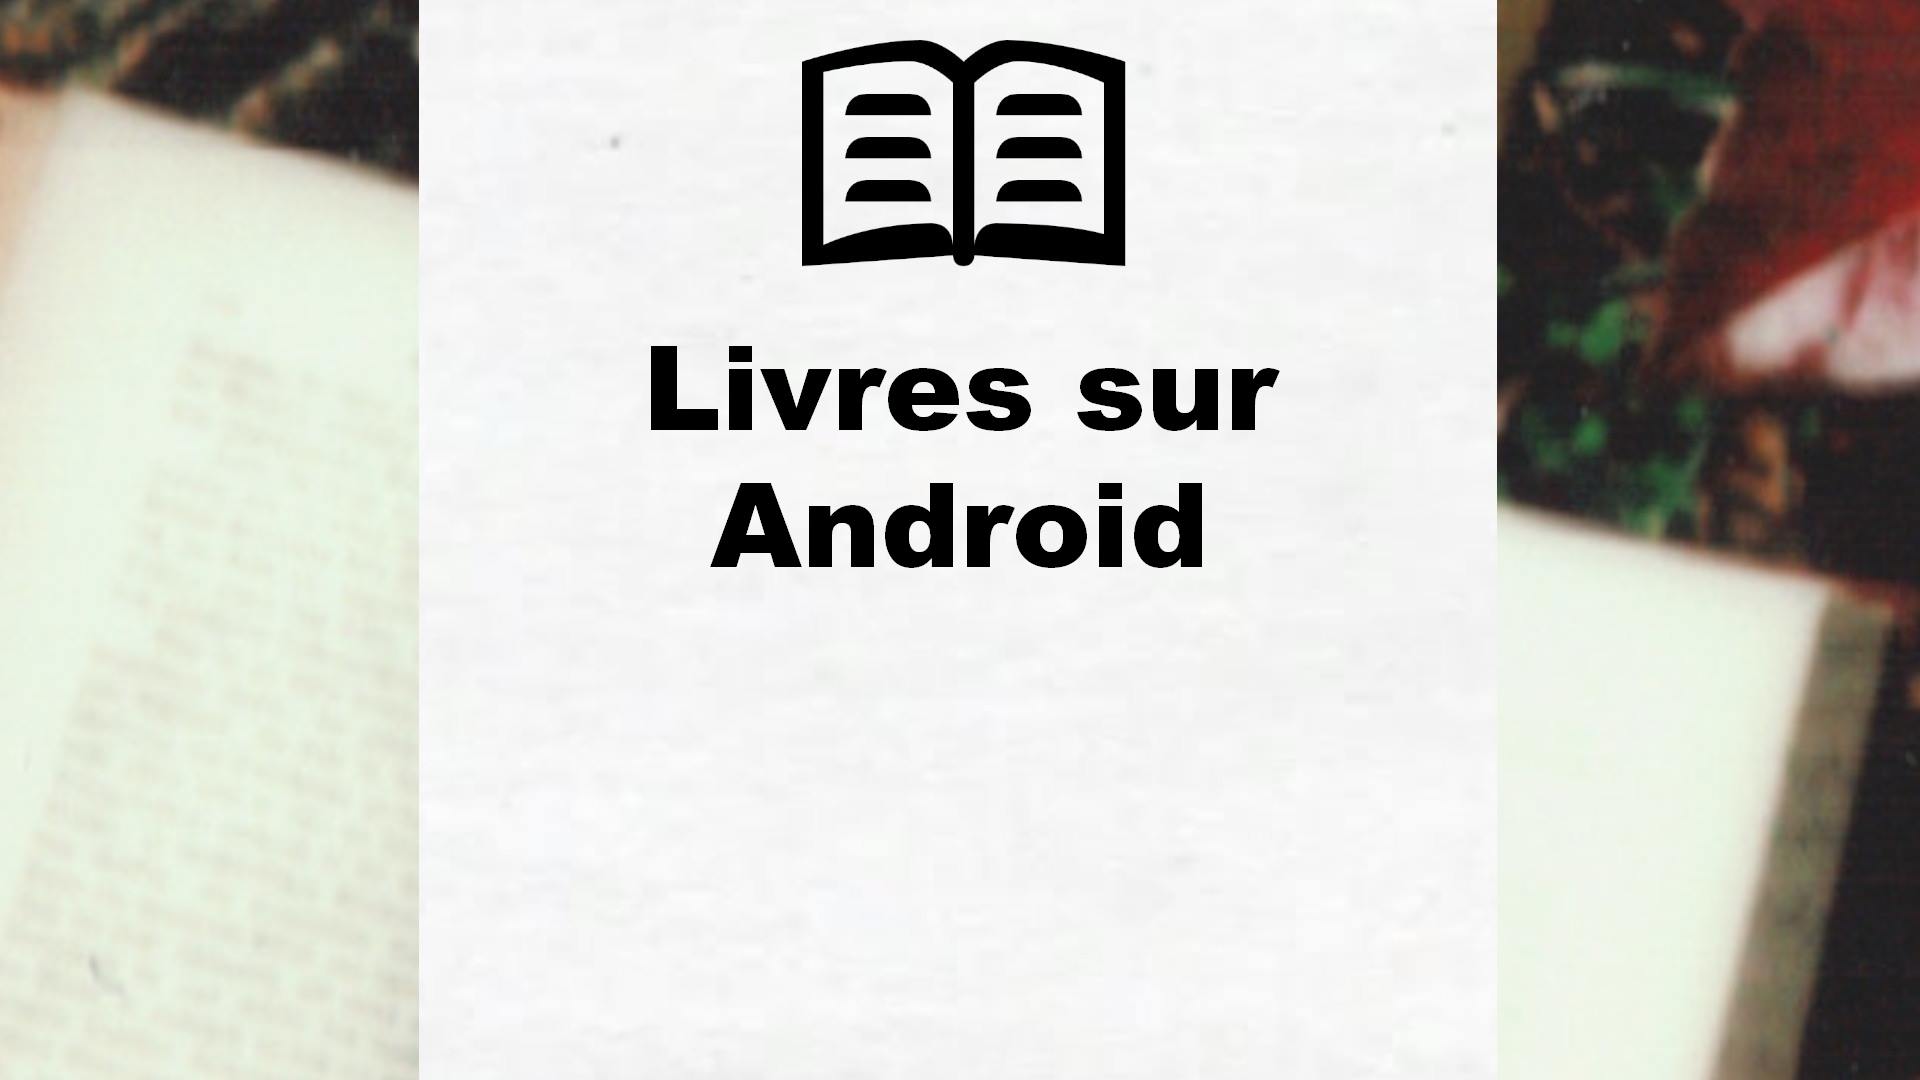 Livres sur Android